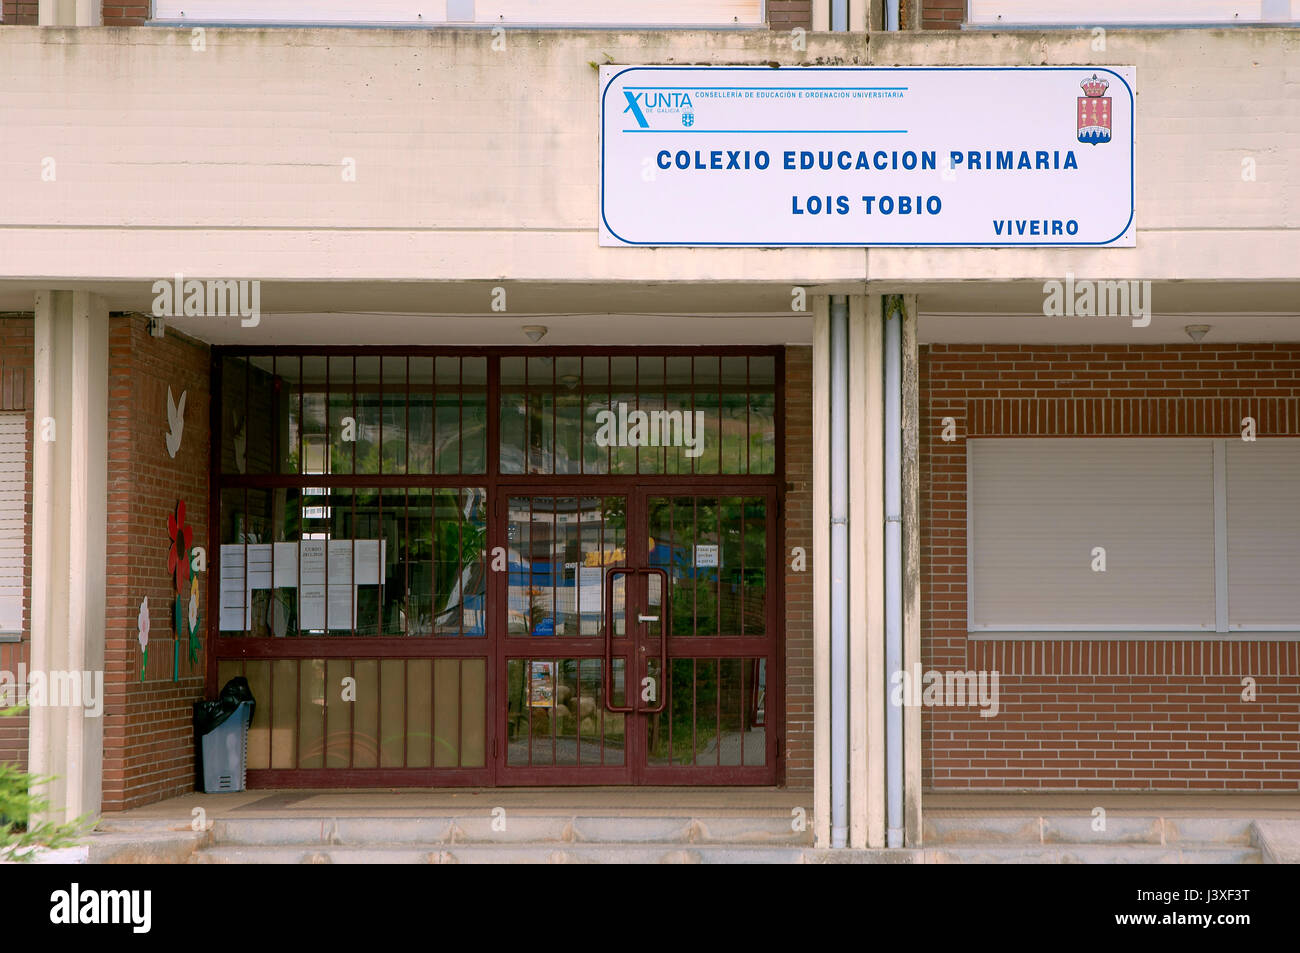 Elementary School Lois Tobio, Viveiro, Lugo province, Region of Galicia, Spain, Europe Stock Photo